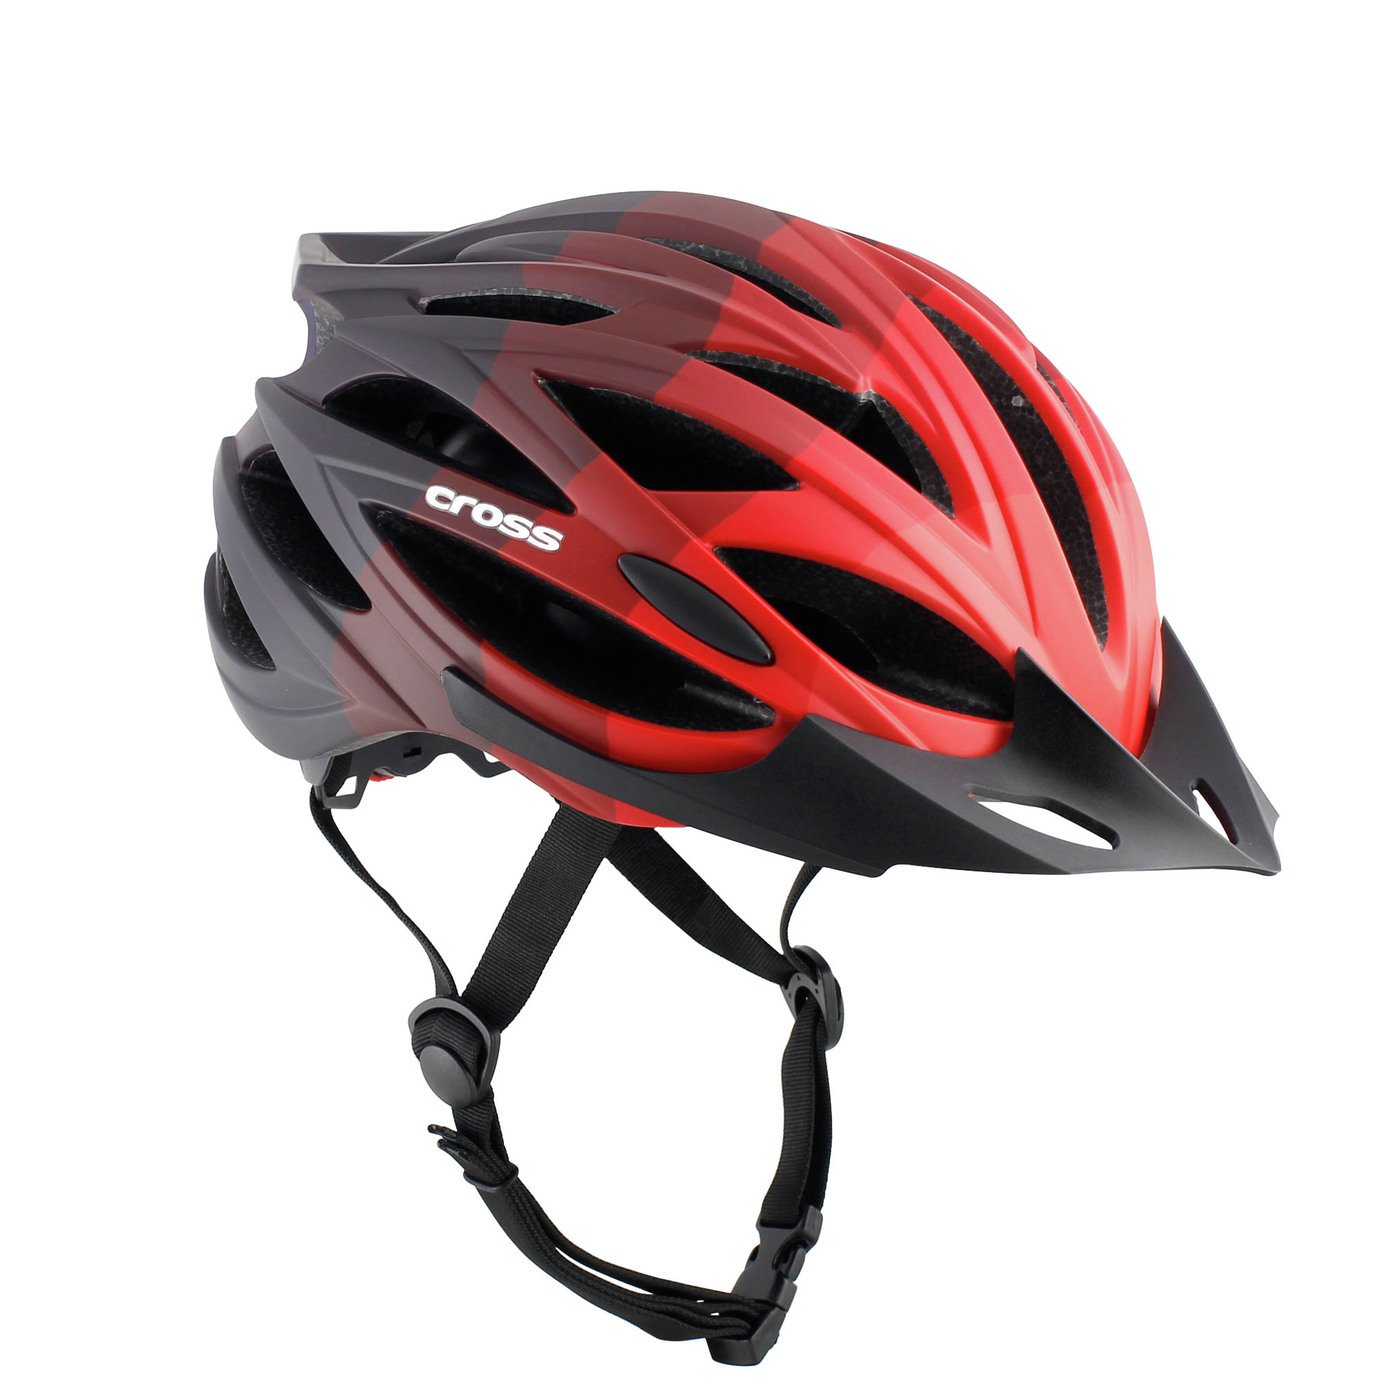 Buy Cross Kids Bike Helmet - Red | Bike 